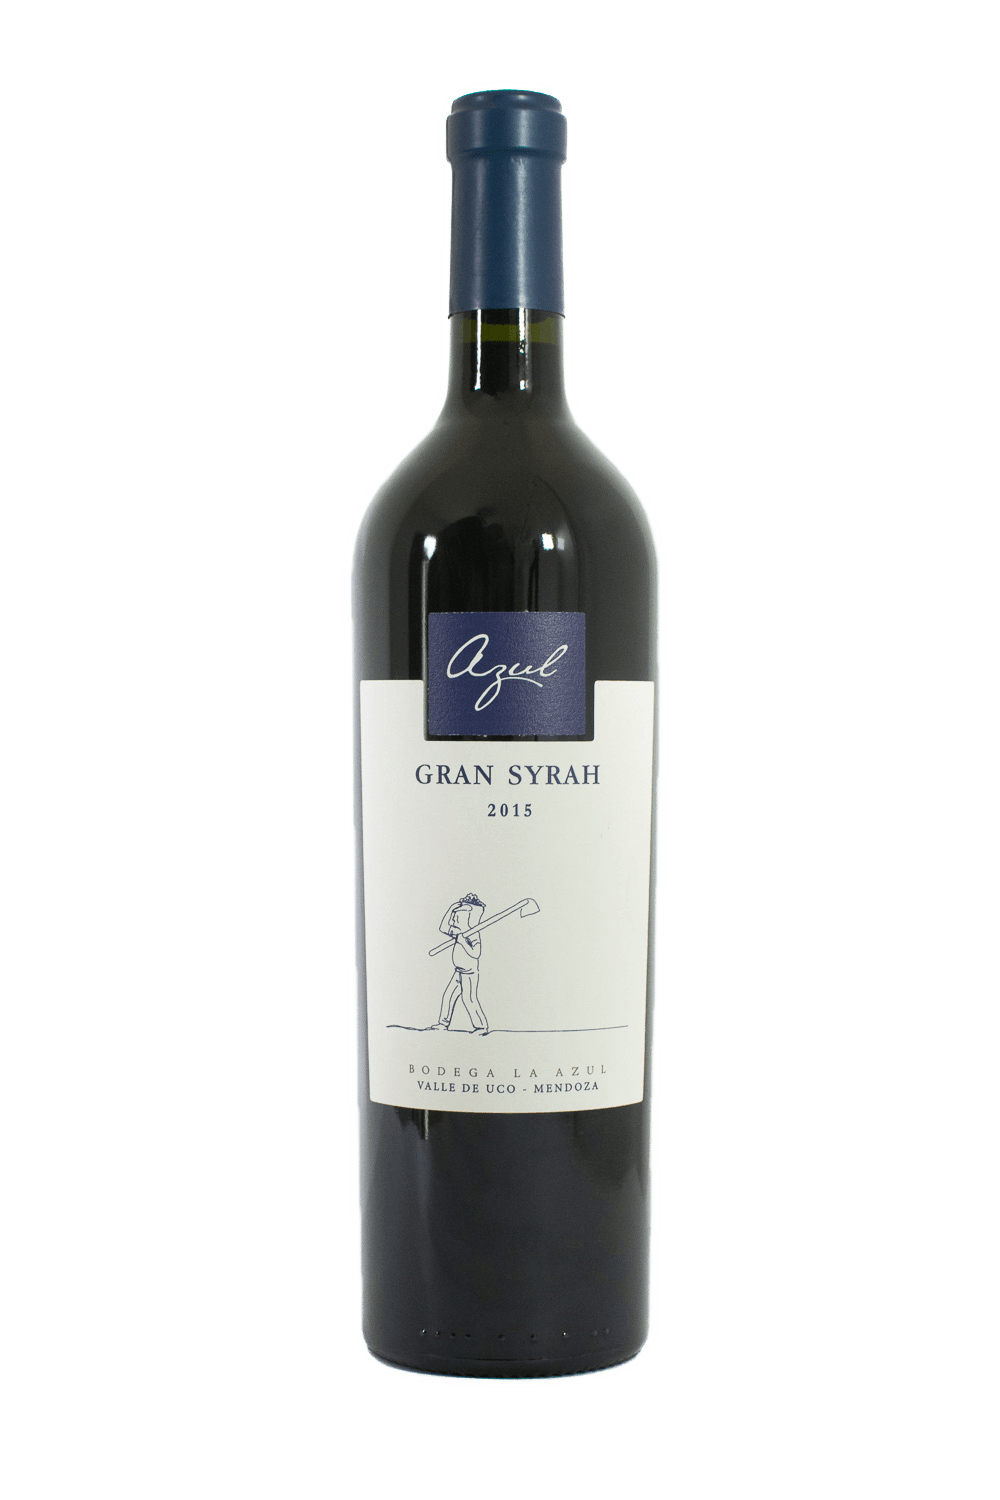 Bodega La Azul - Gran Syrah 2015 - The Blend Wines